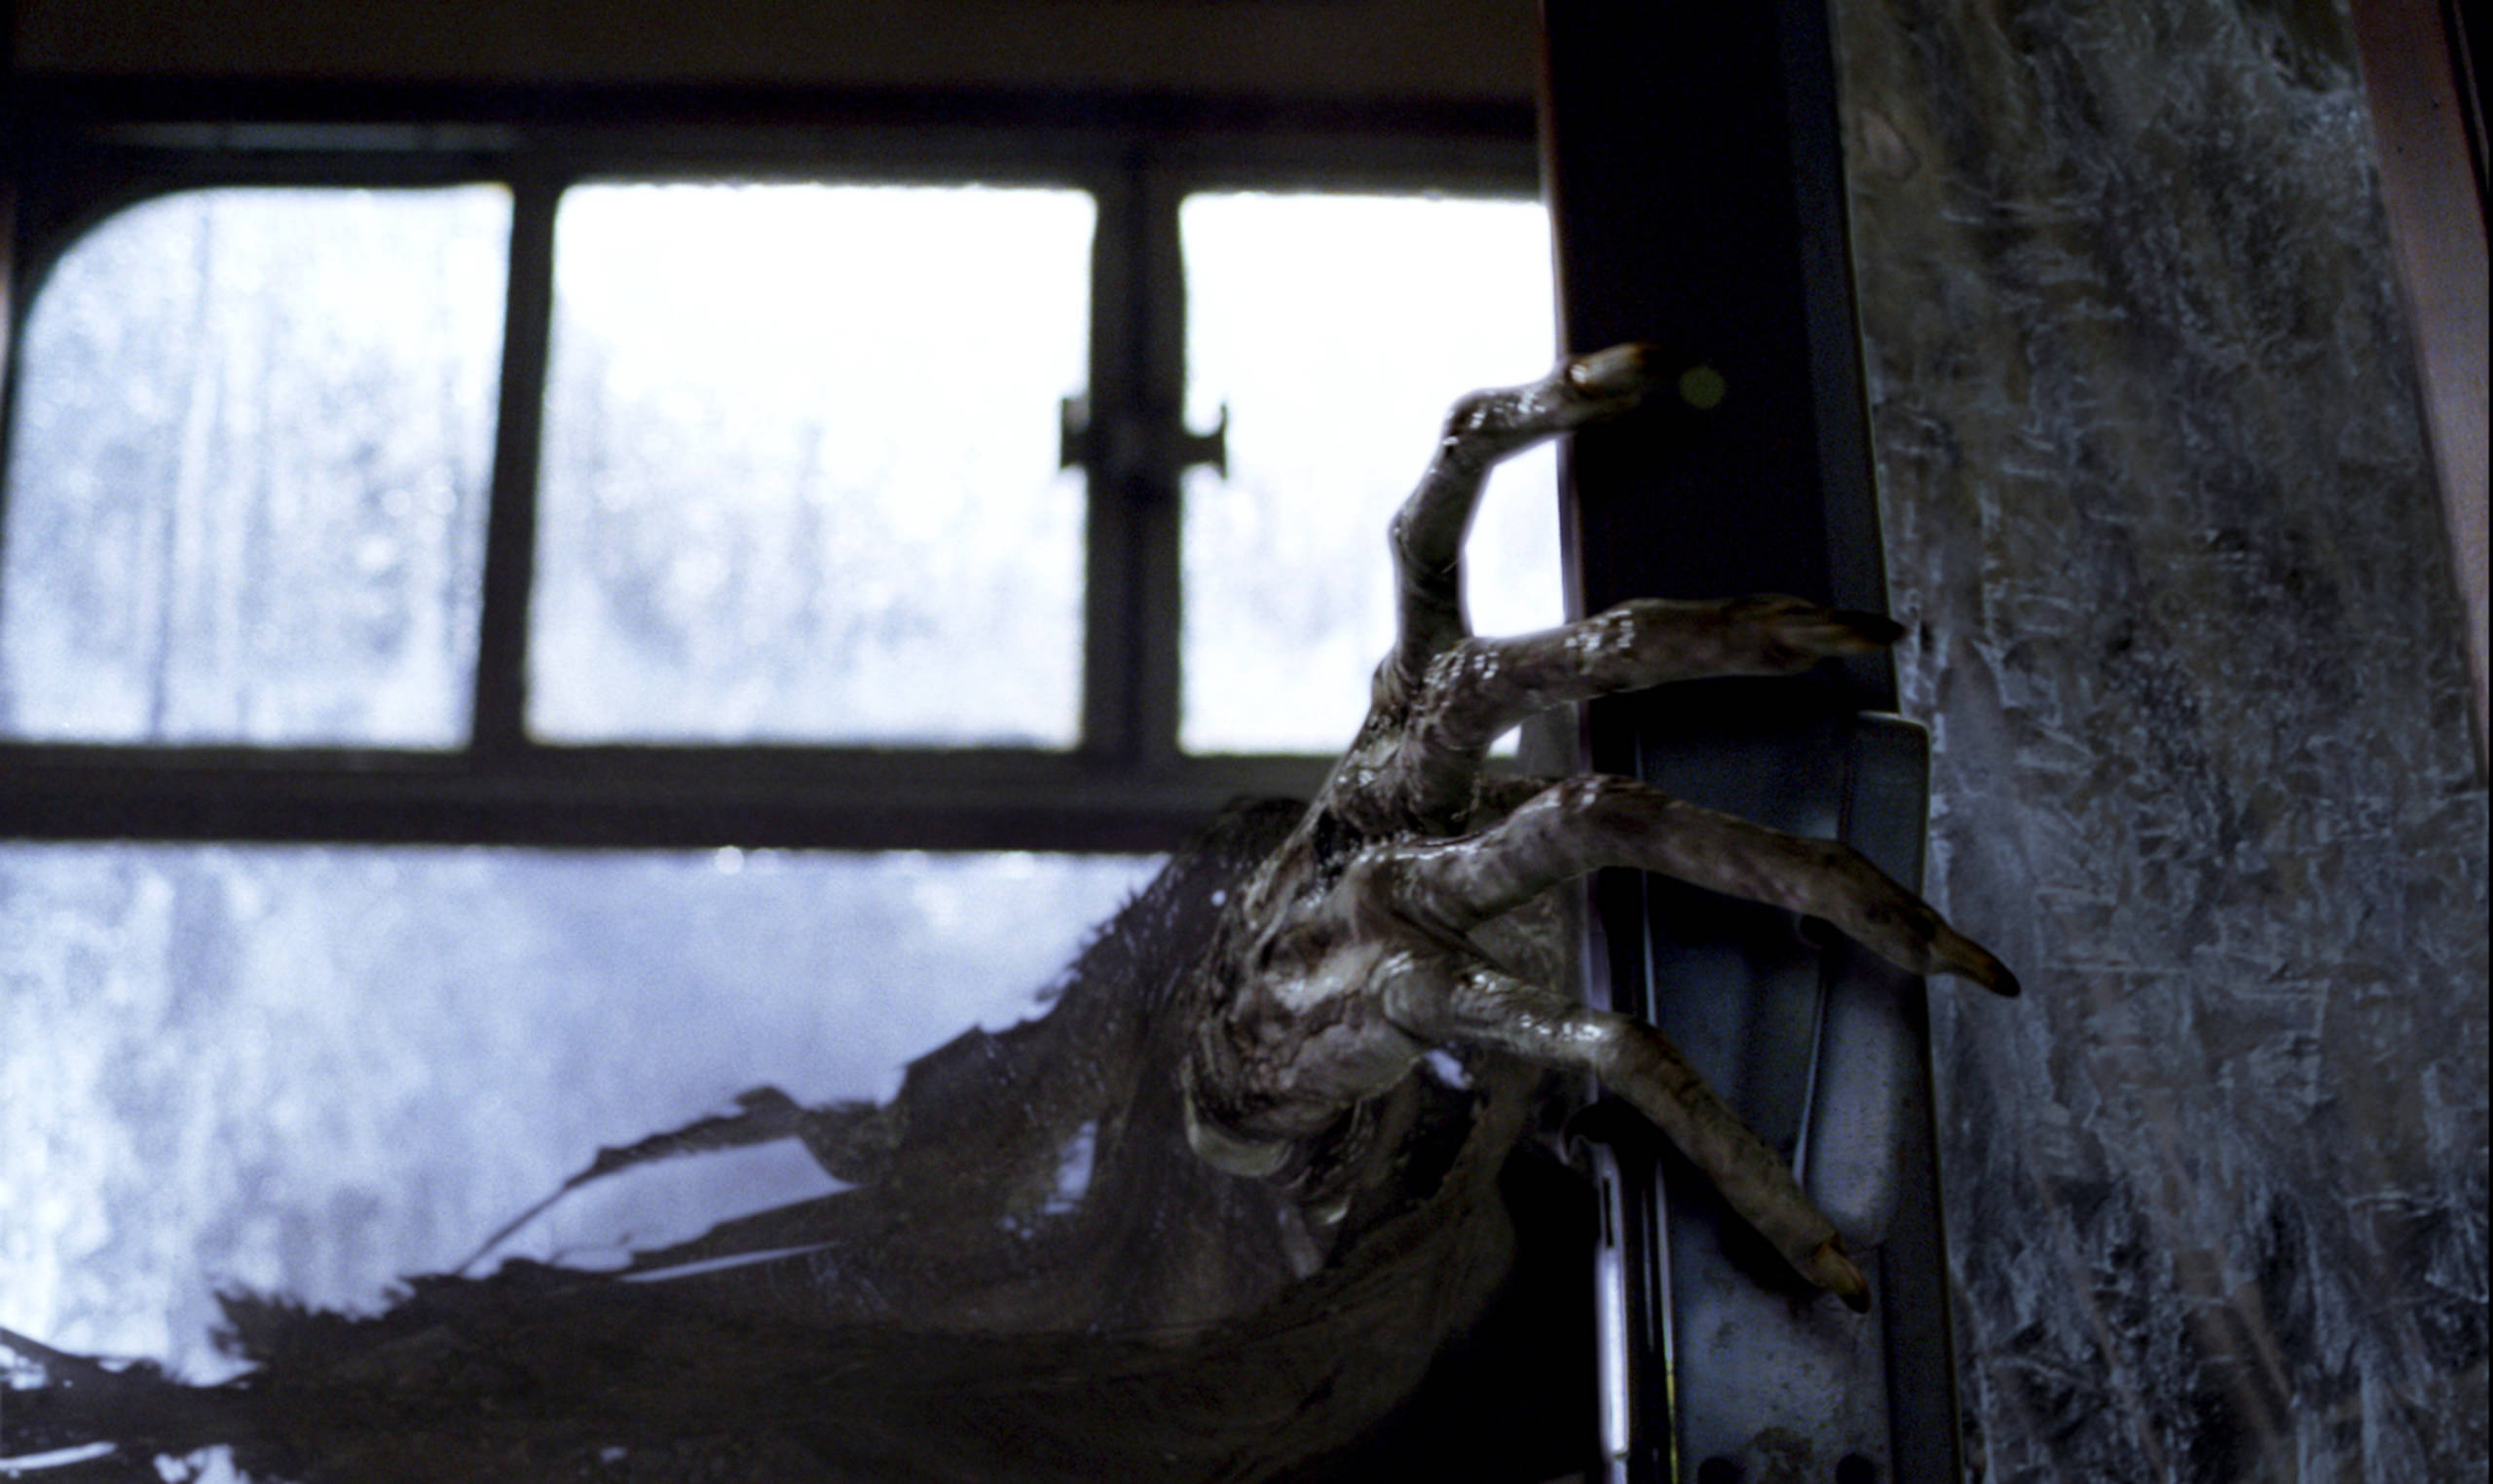 A Dementor's hand slowly opens the carriage door